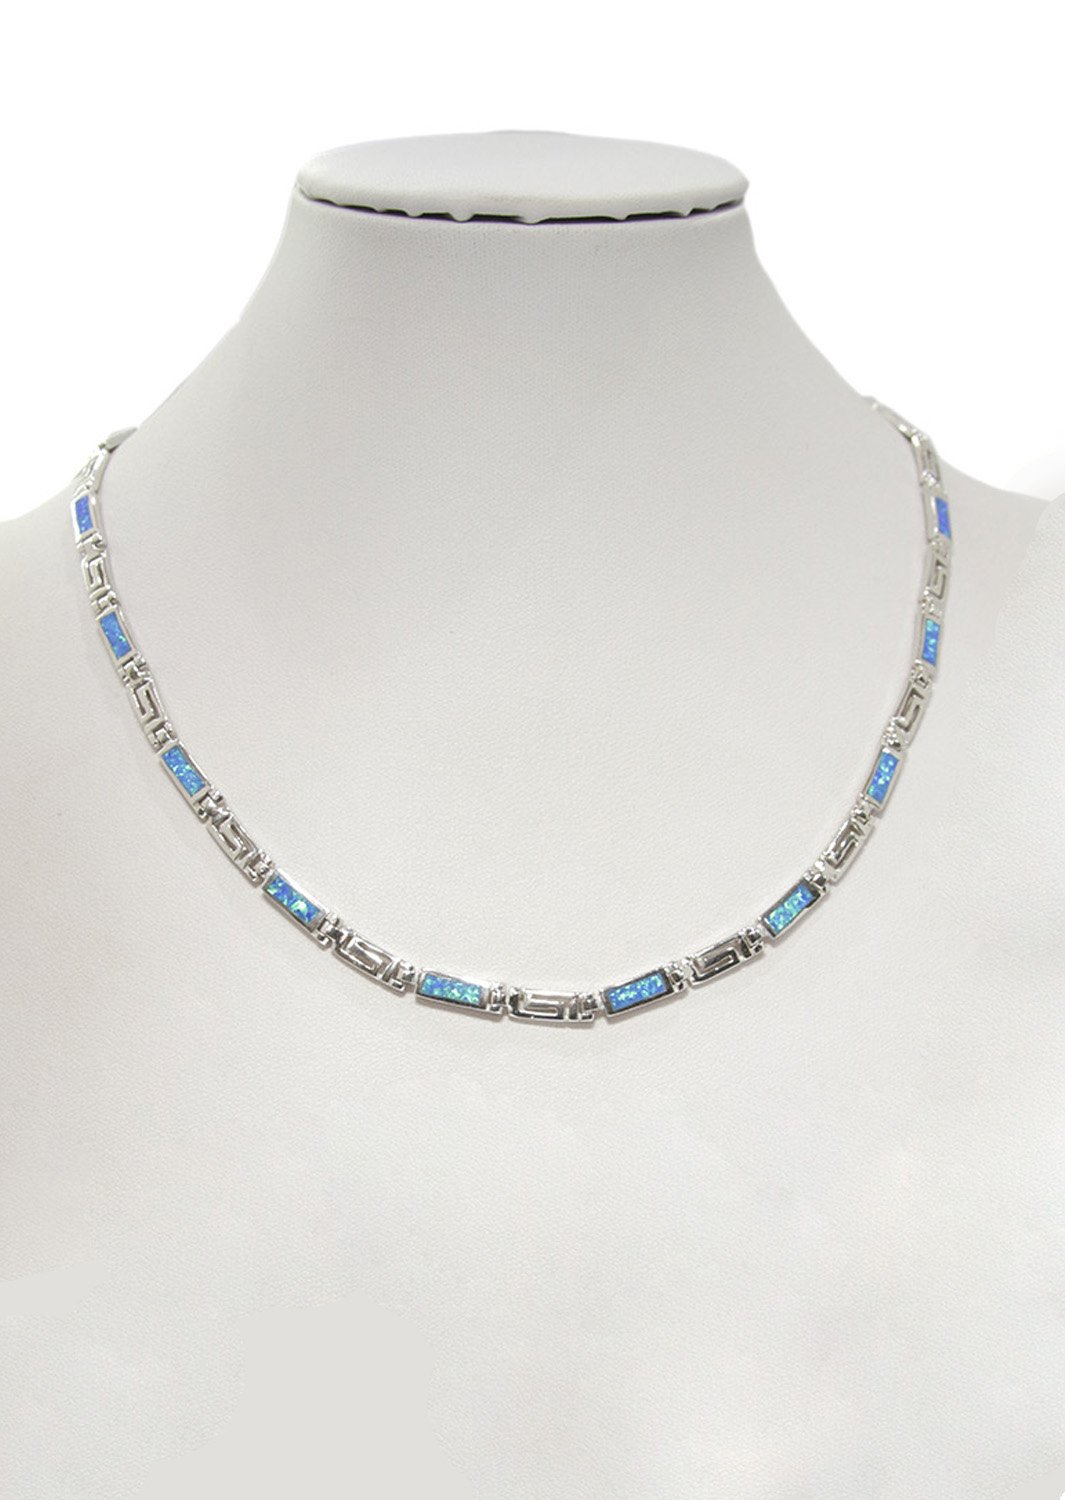 Silver necklace with Meander - Greek key design and opal gemstones 